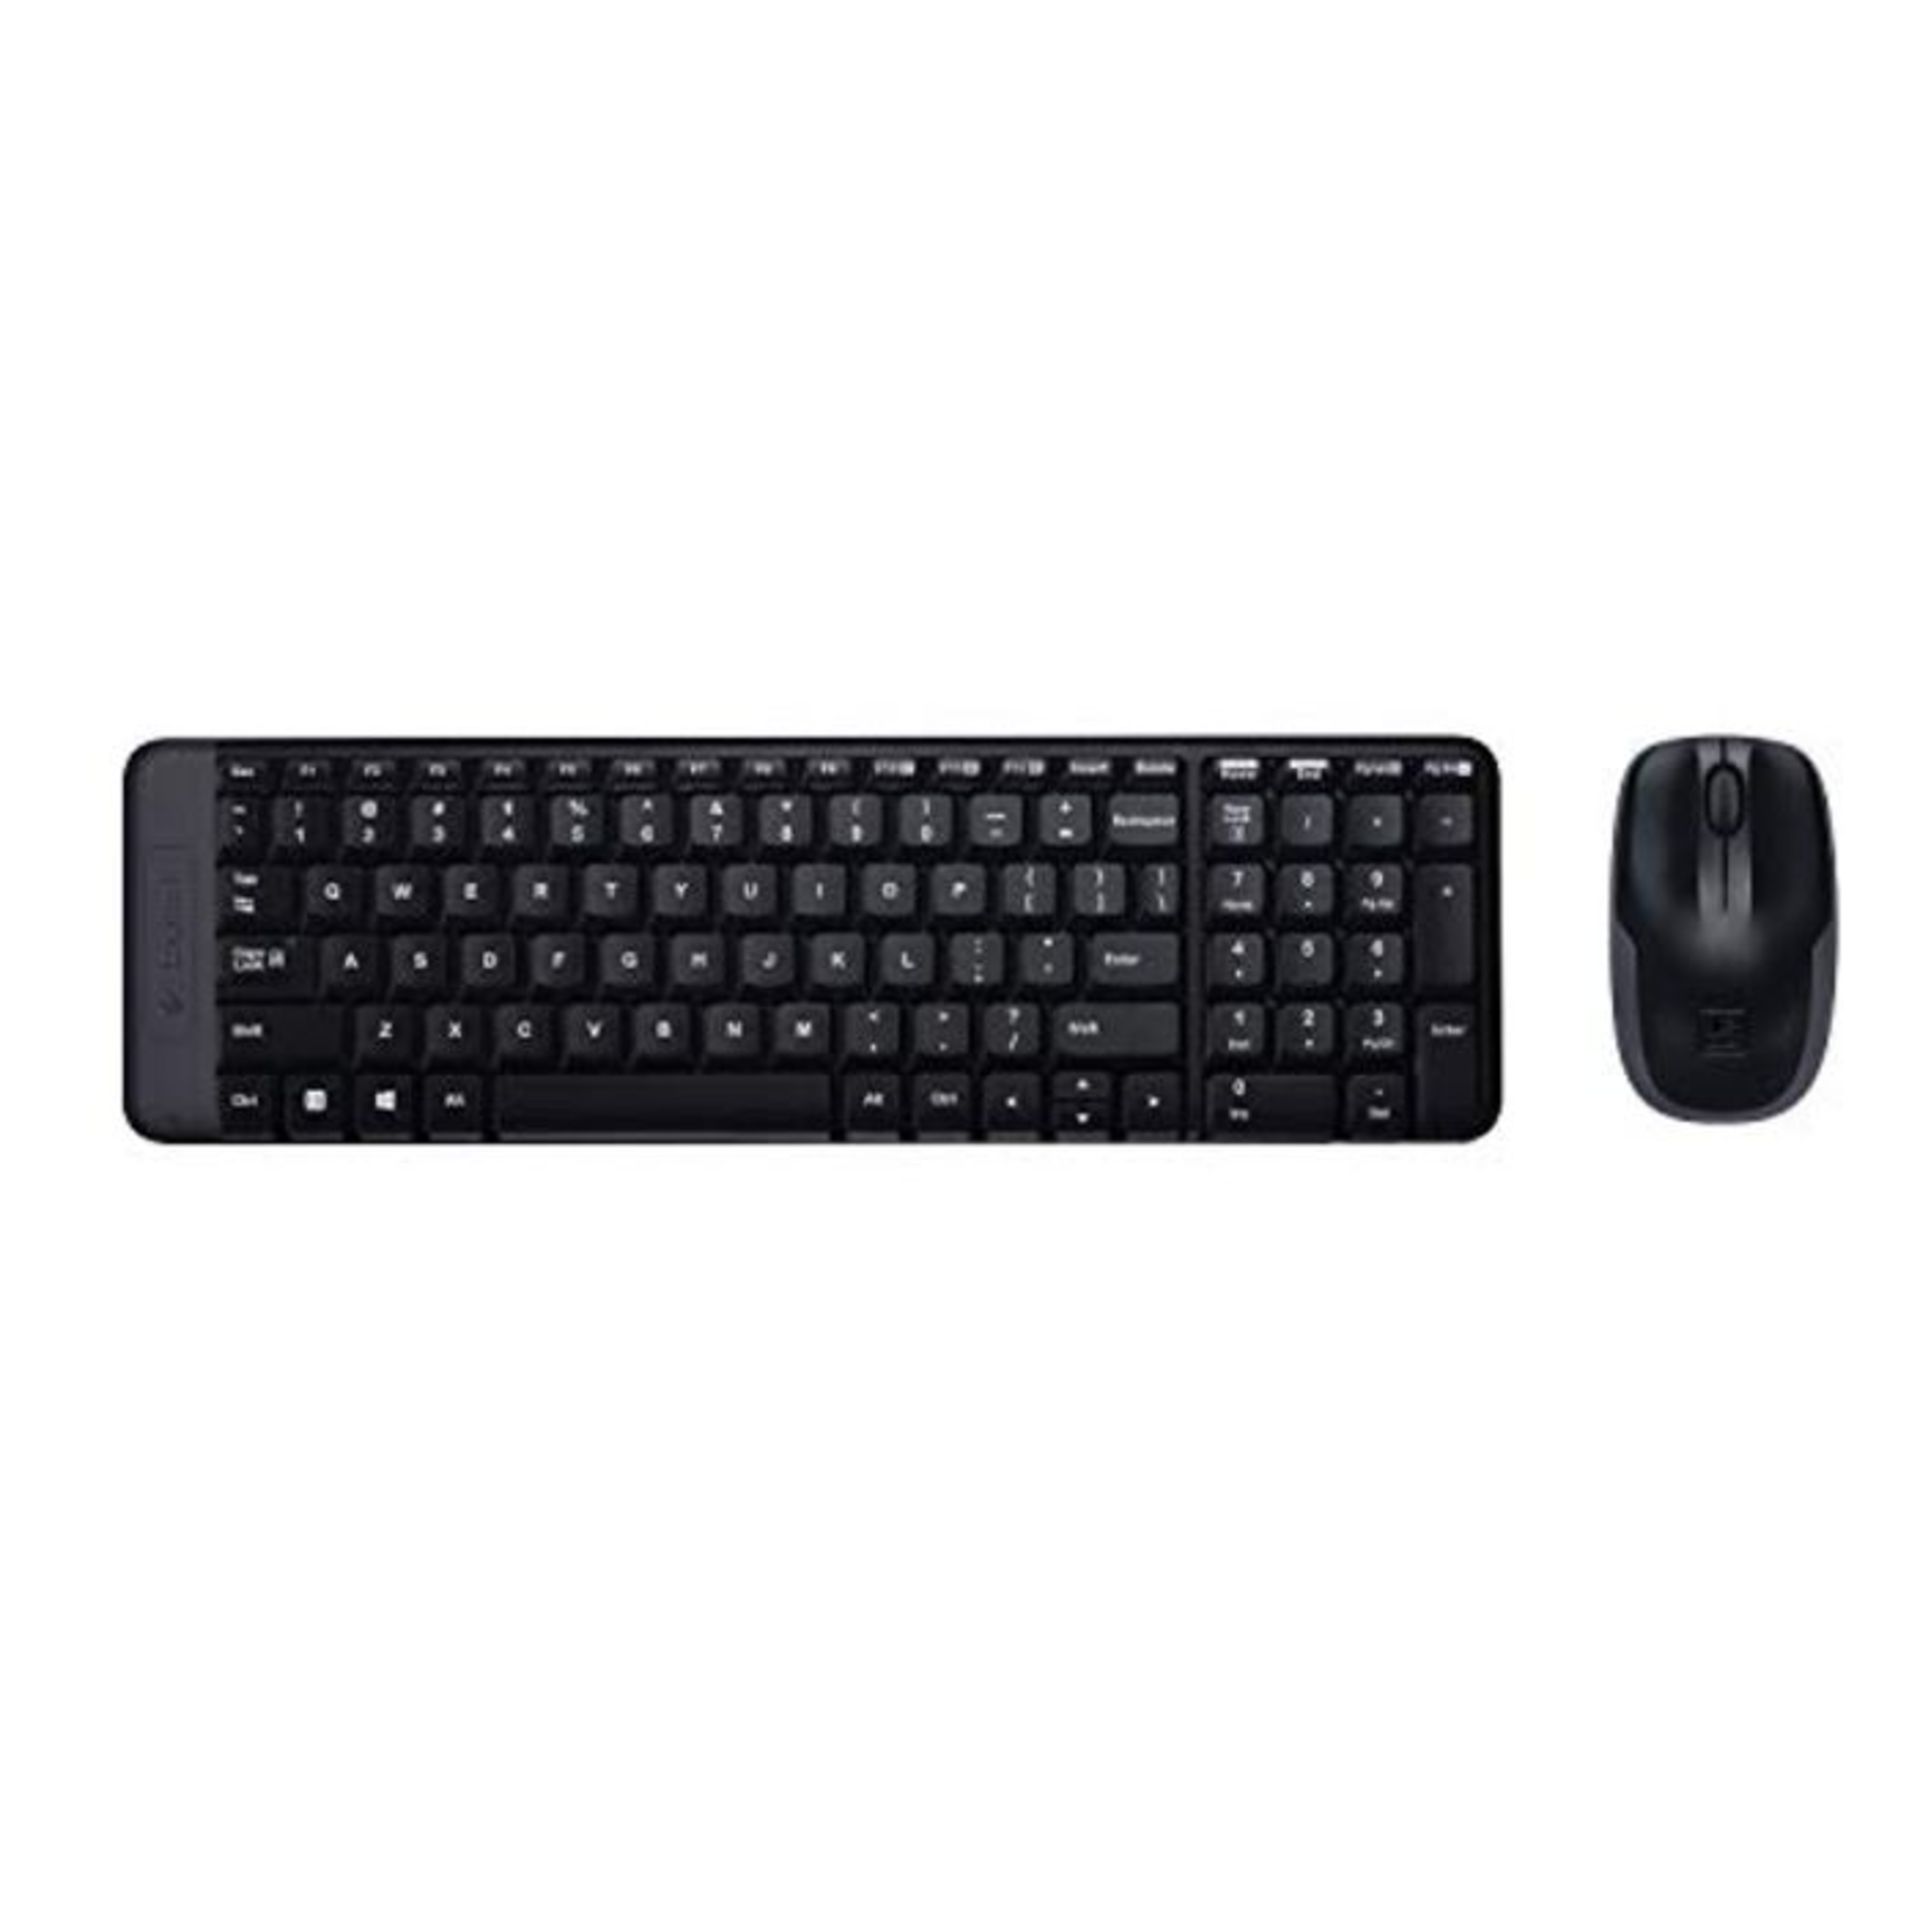 Logitech MK220 Compact Wireless Keyboard and Mouse Combo, QWERTY Spanish Layout - Blac